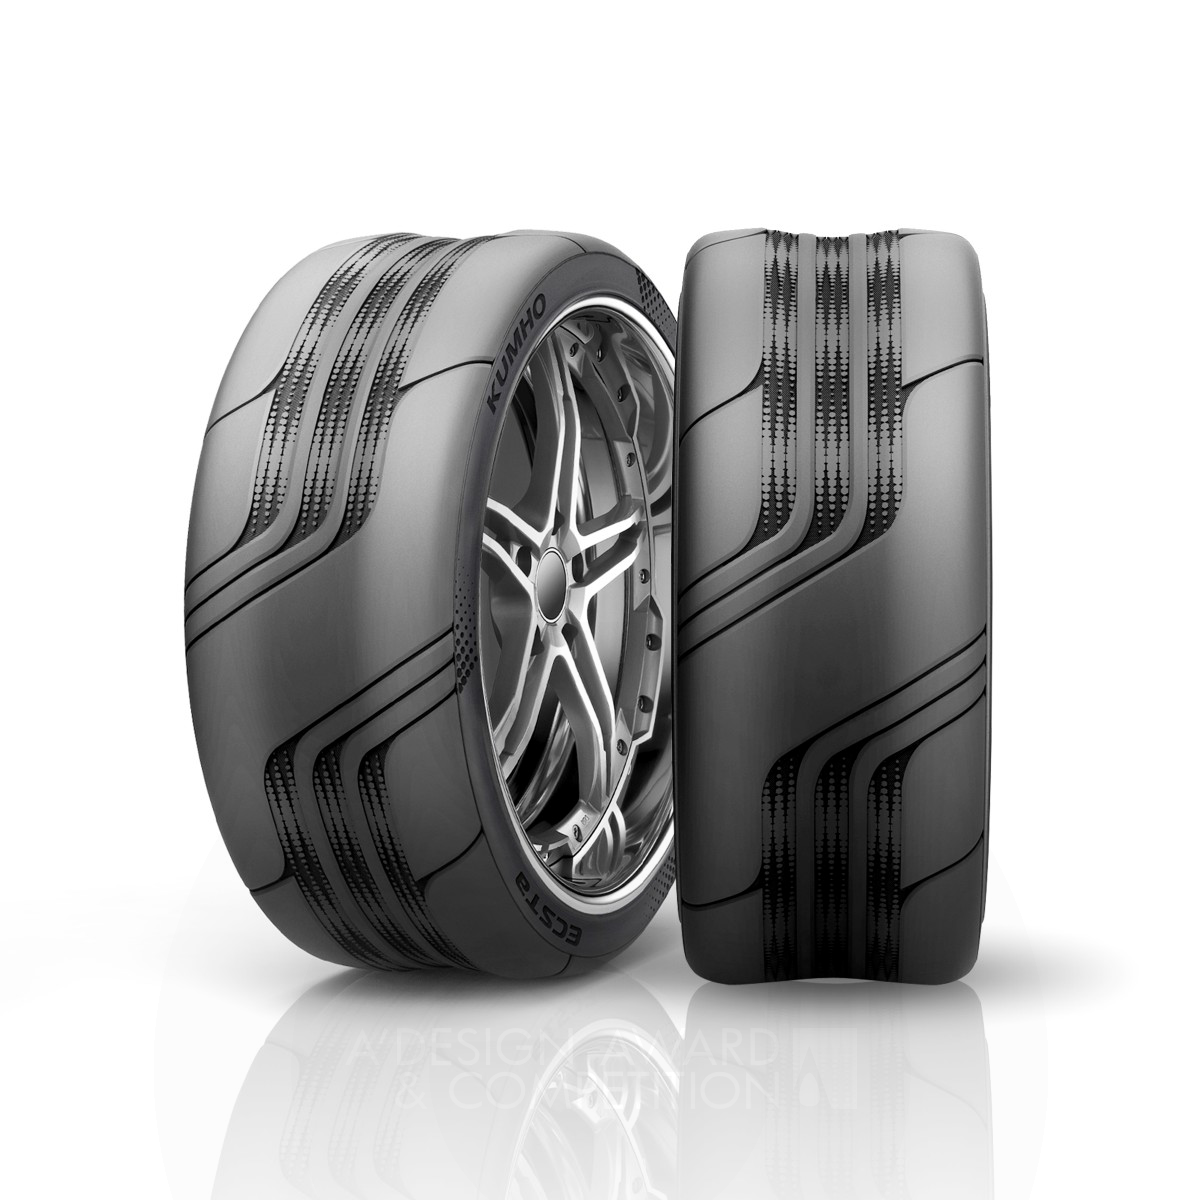 Max-treme Tire by Lee Jae-moon & Park Jae-pil Golden Vehicle, Mobility and Transportation Design Award Winner 2015 